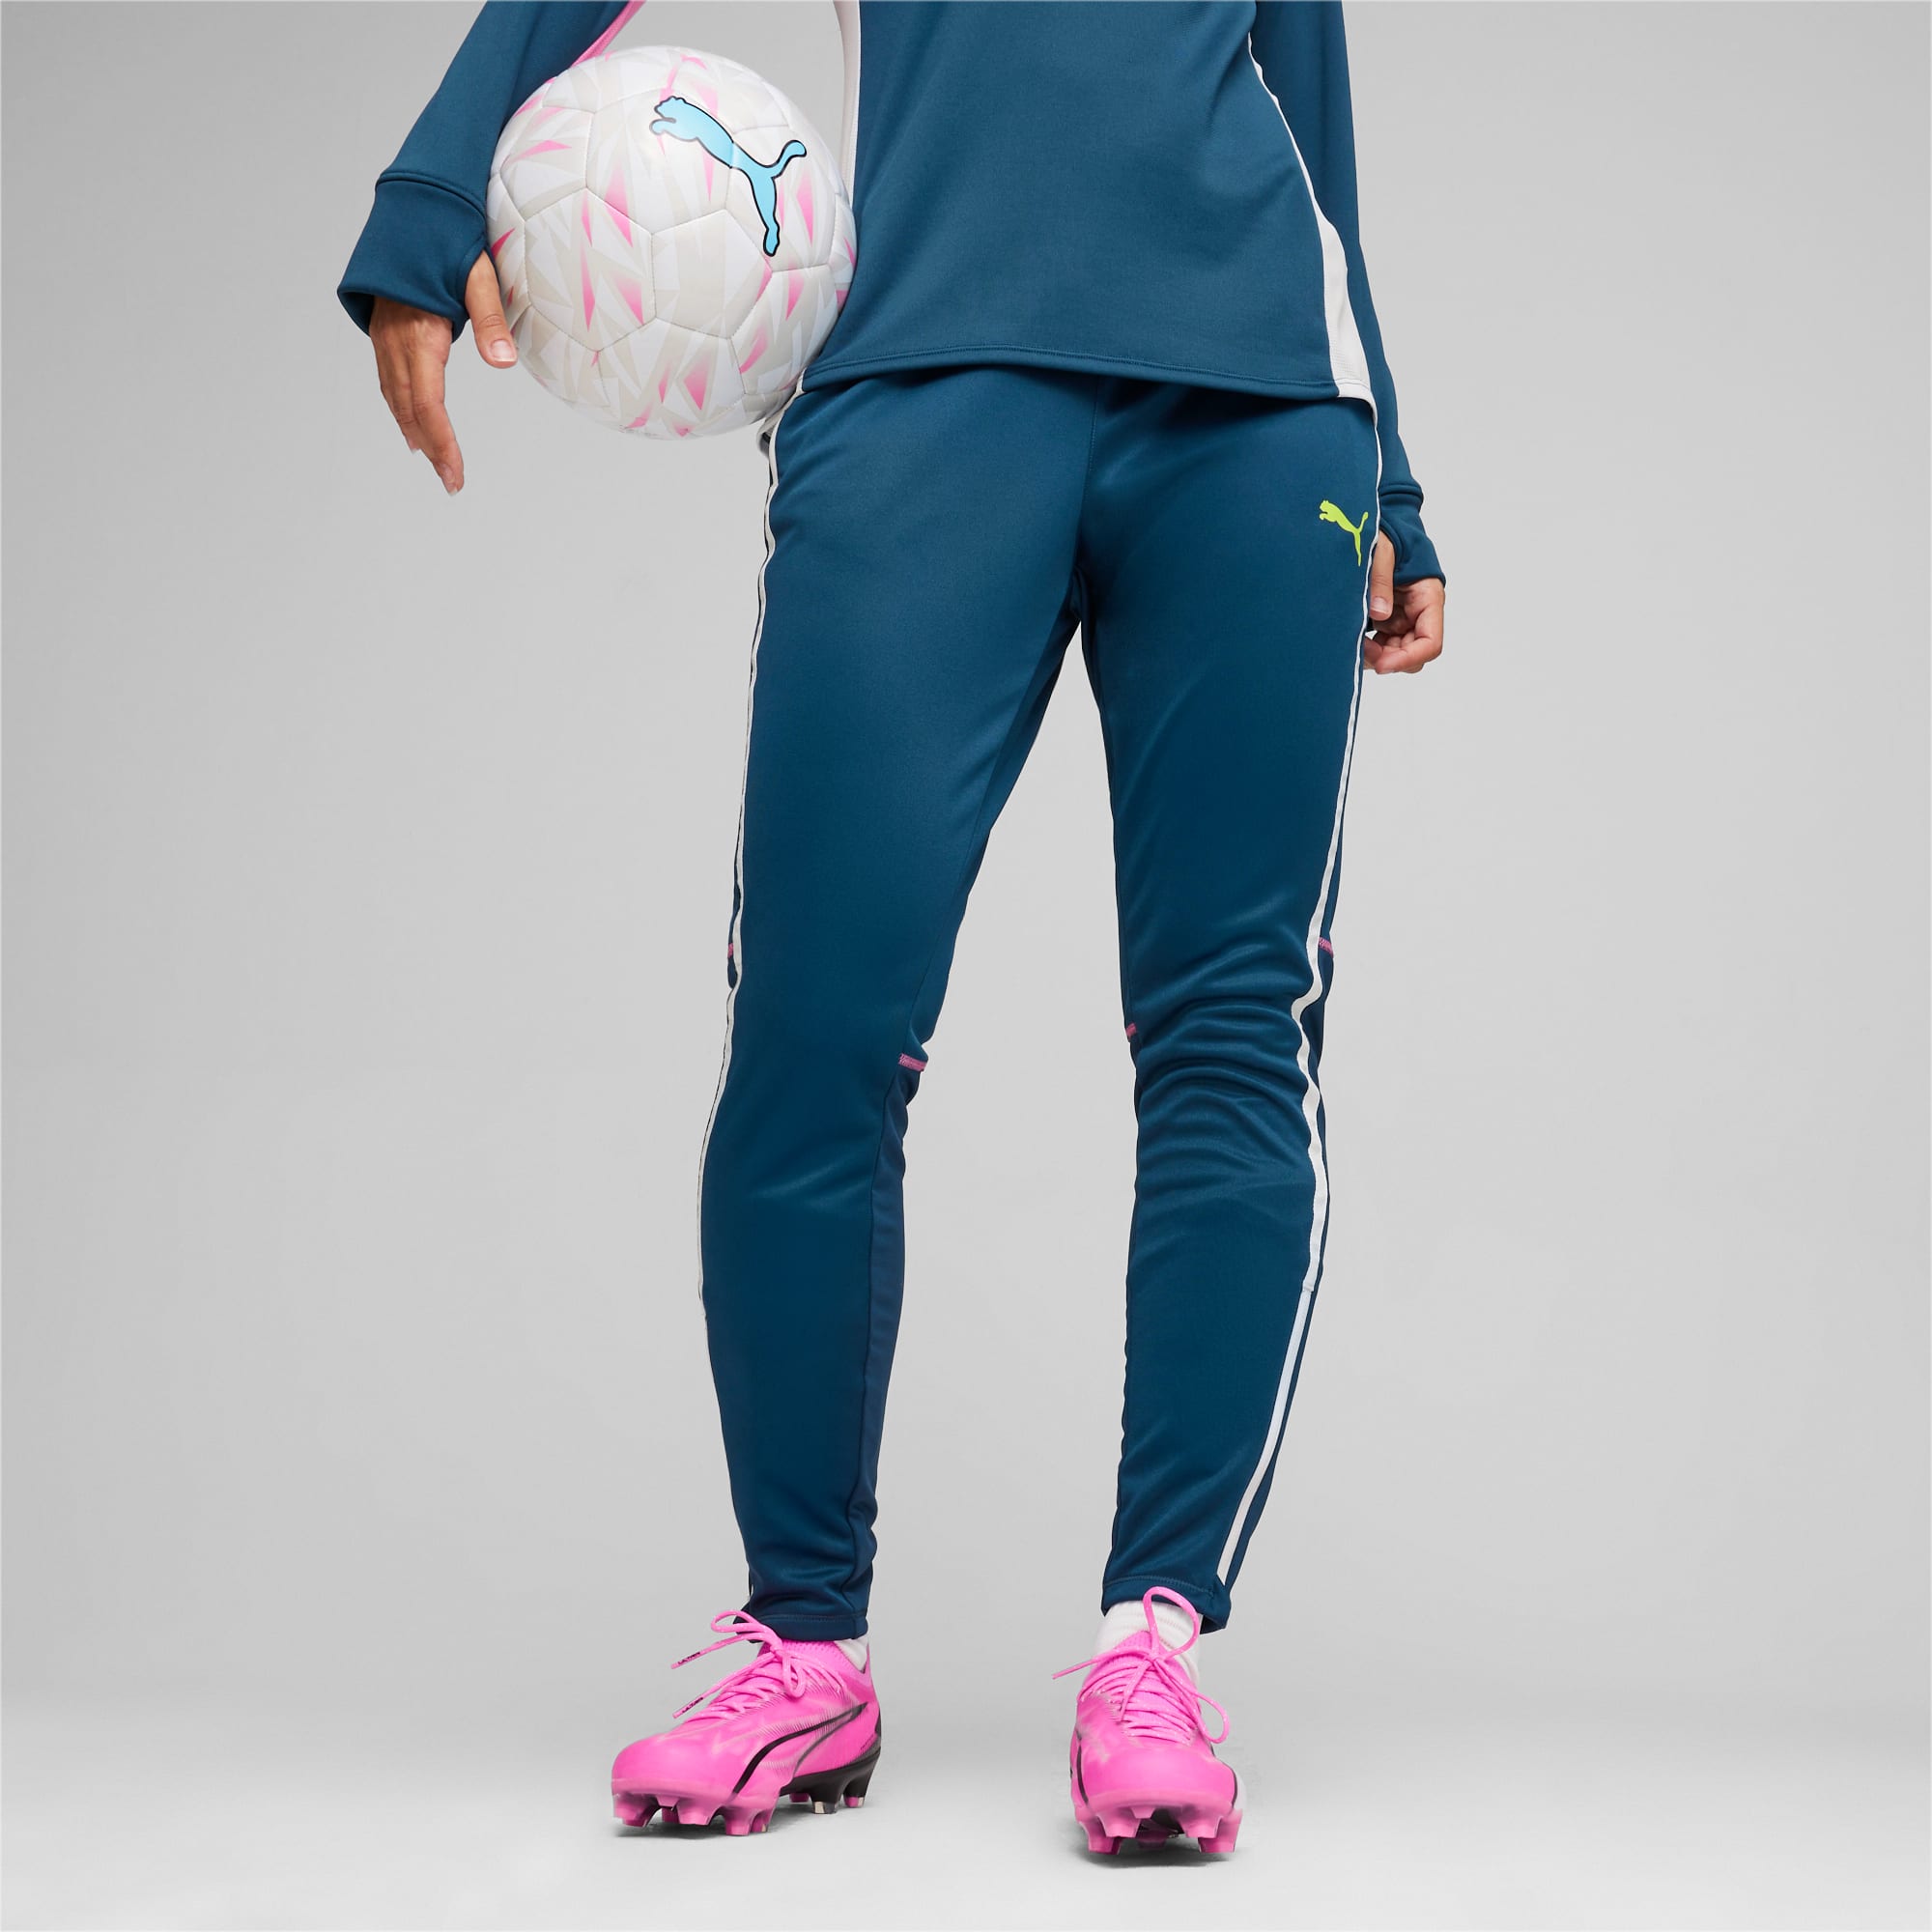 individualBLAZE Women\'s Football Training Pants | | green PUMA